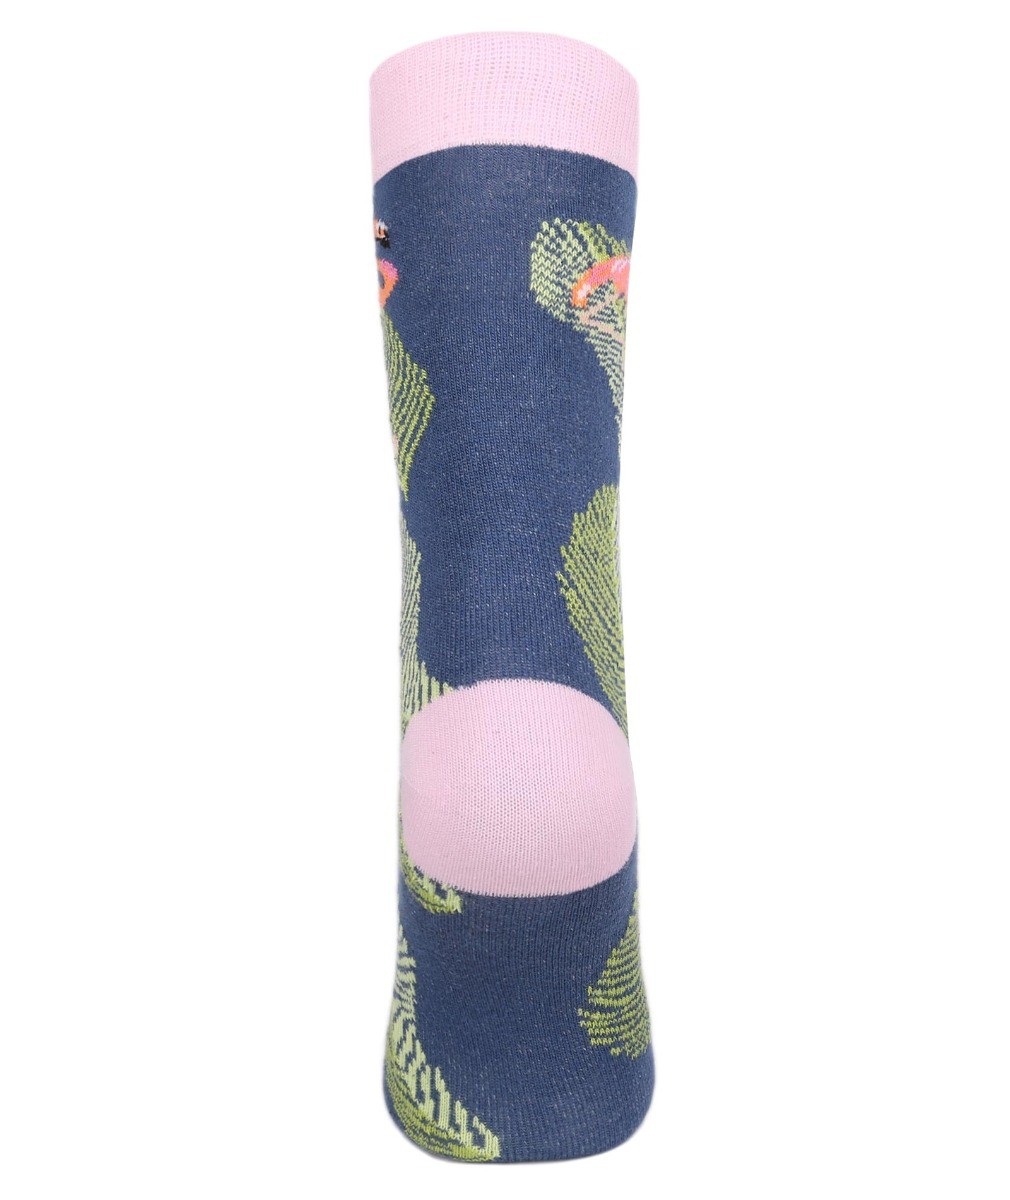 Unisex Kinder Flamingo Socken - Neuheit - Blau - grün - rosa